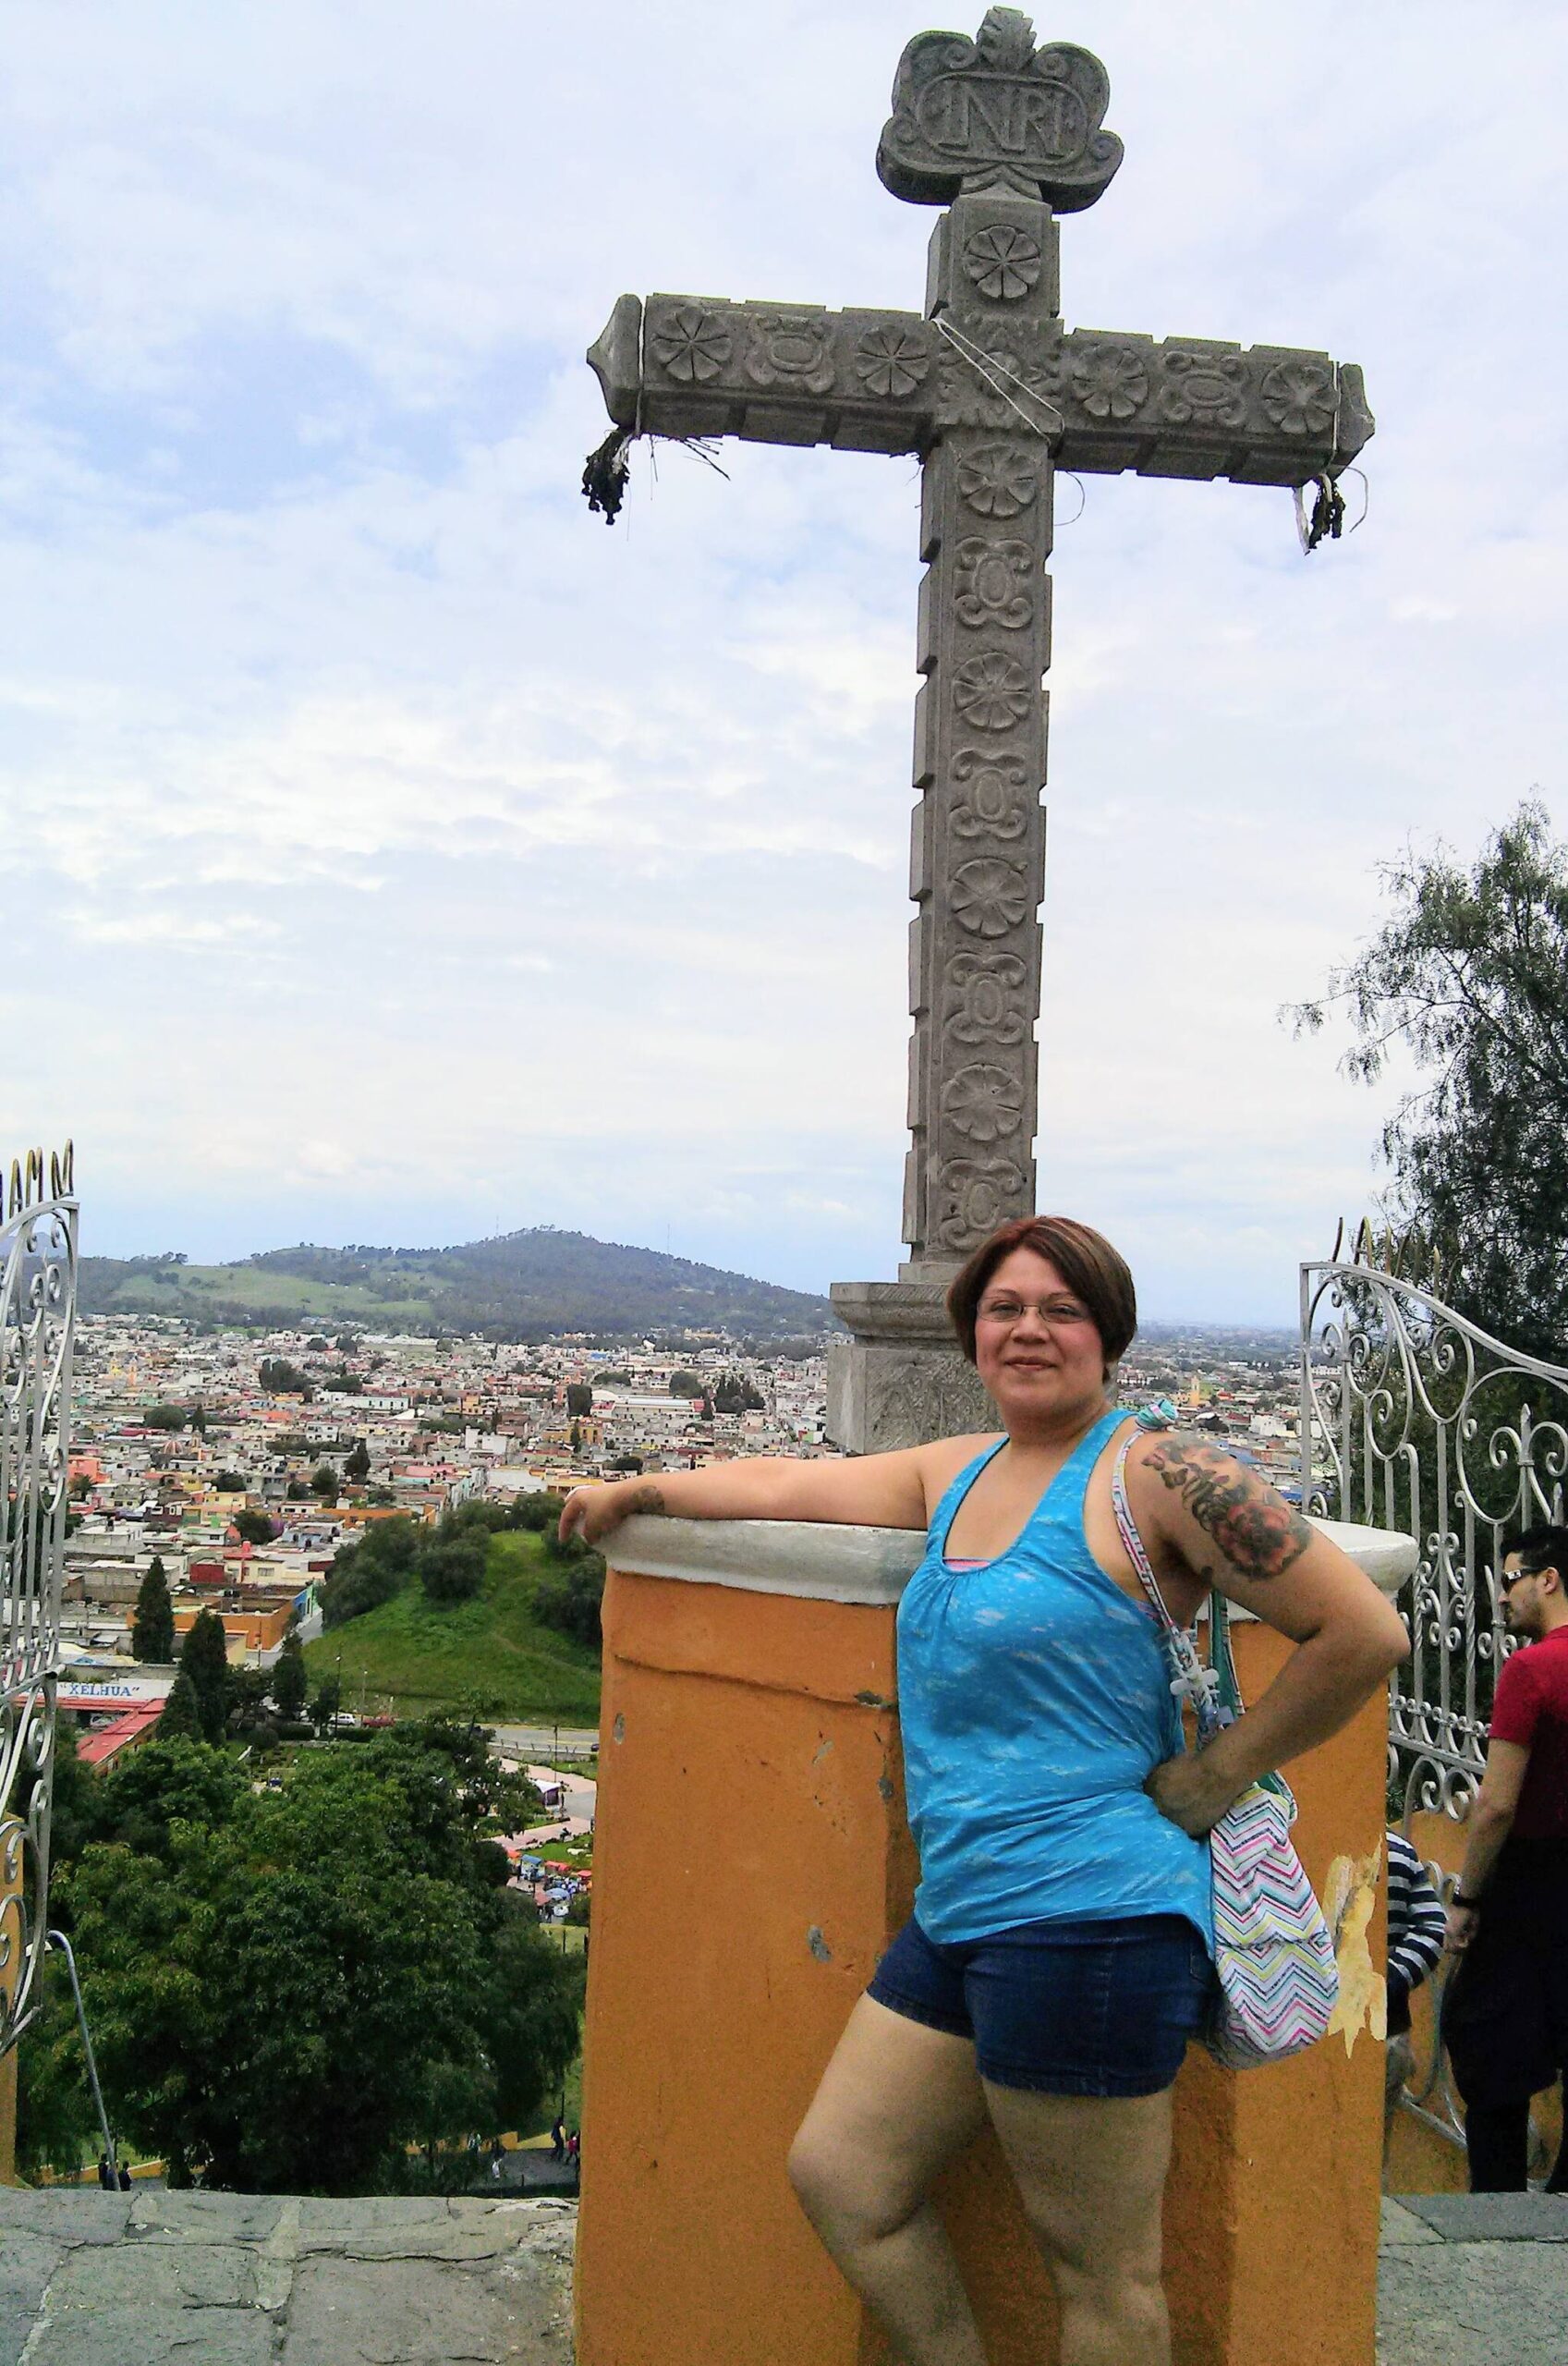 Photo provided
Linda Mosquera in Cholula, Puebla, Mexico.